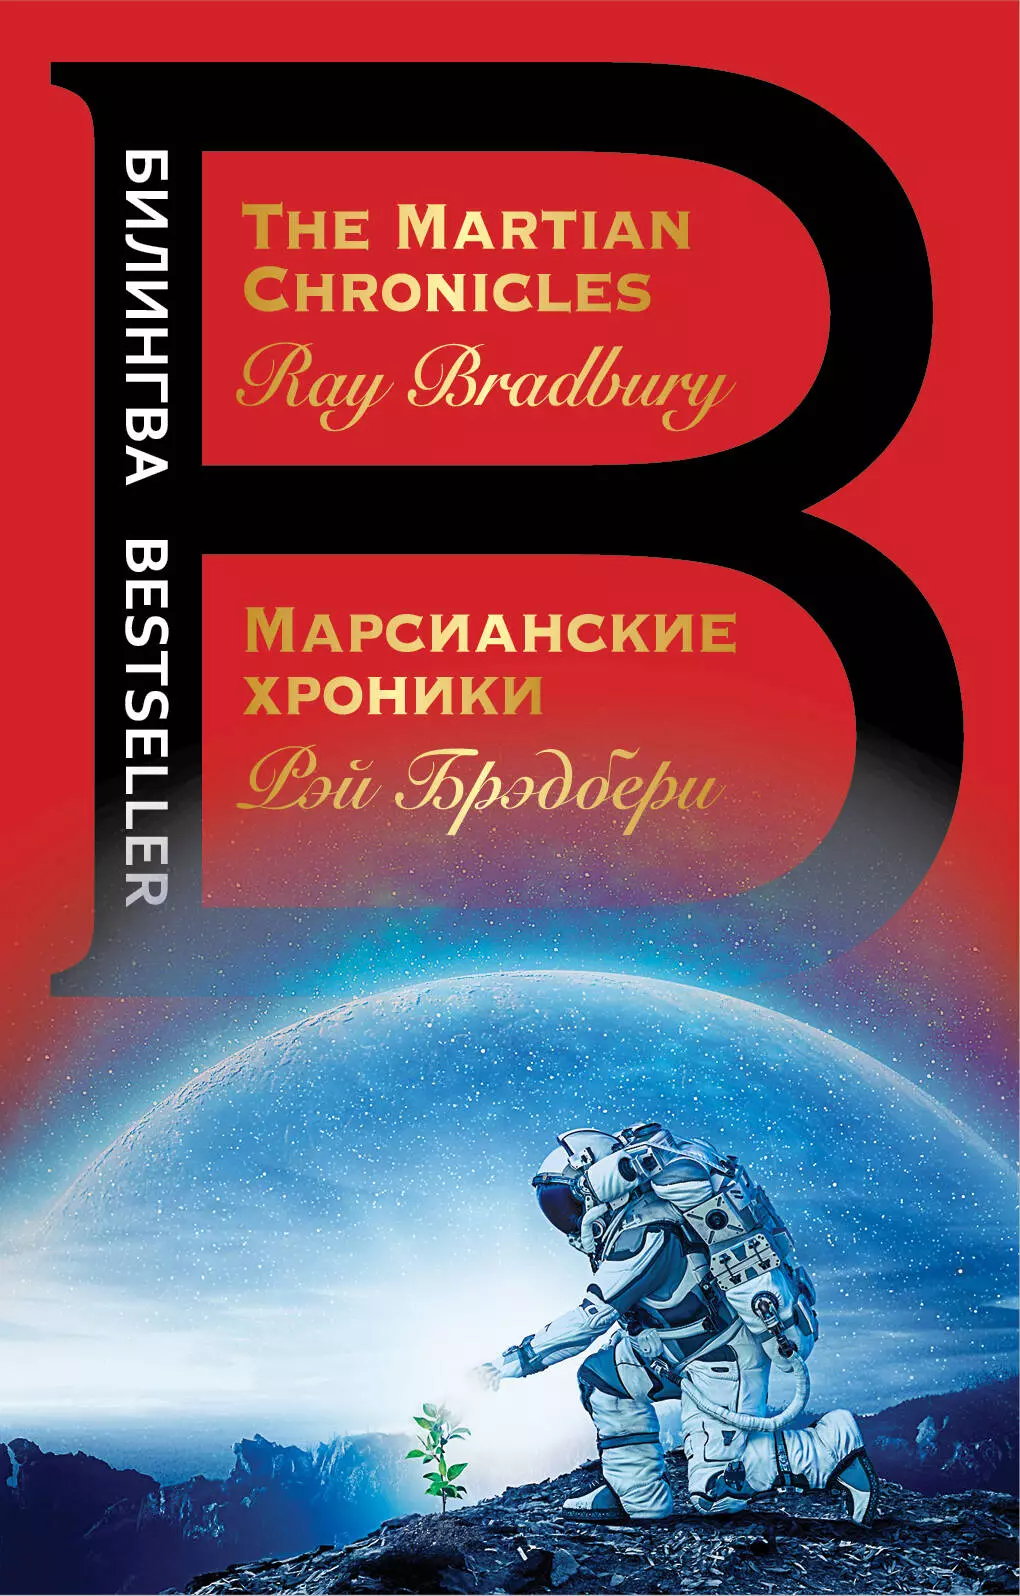 Жданов Лев Львович, Брэдбери Рэй - Марсианские хроники = The Martian Chronicles